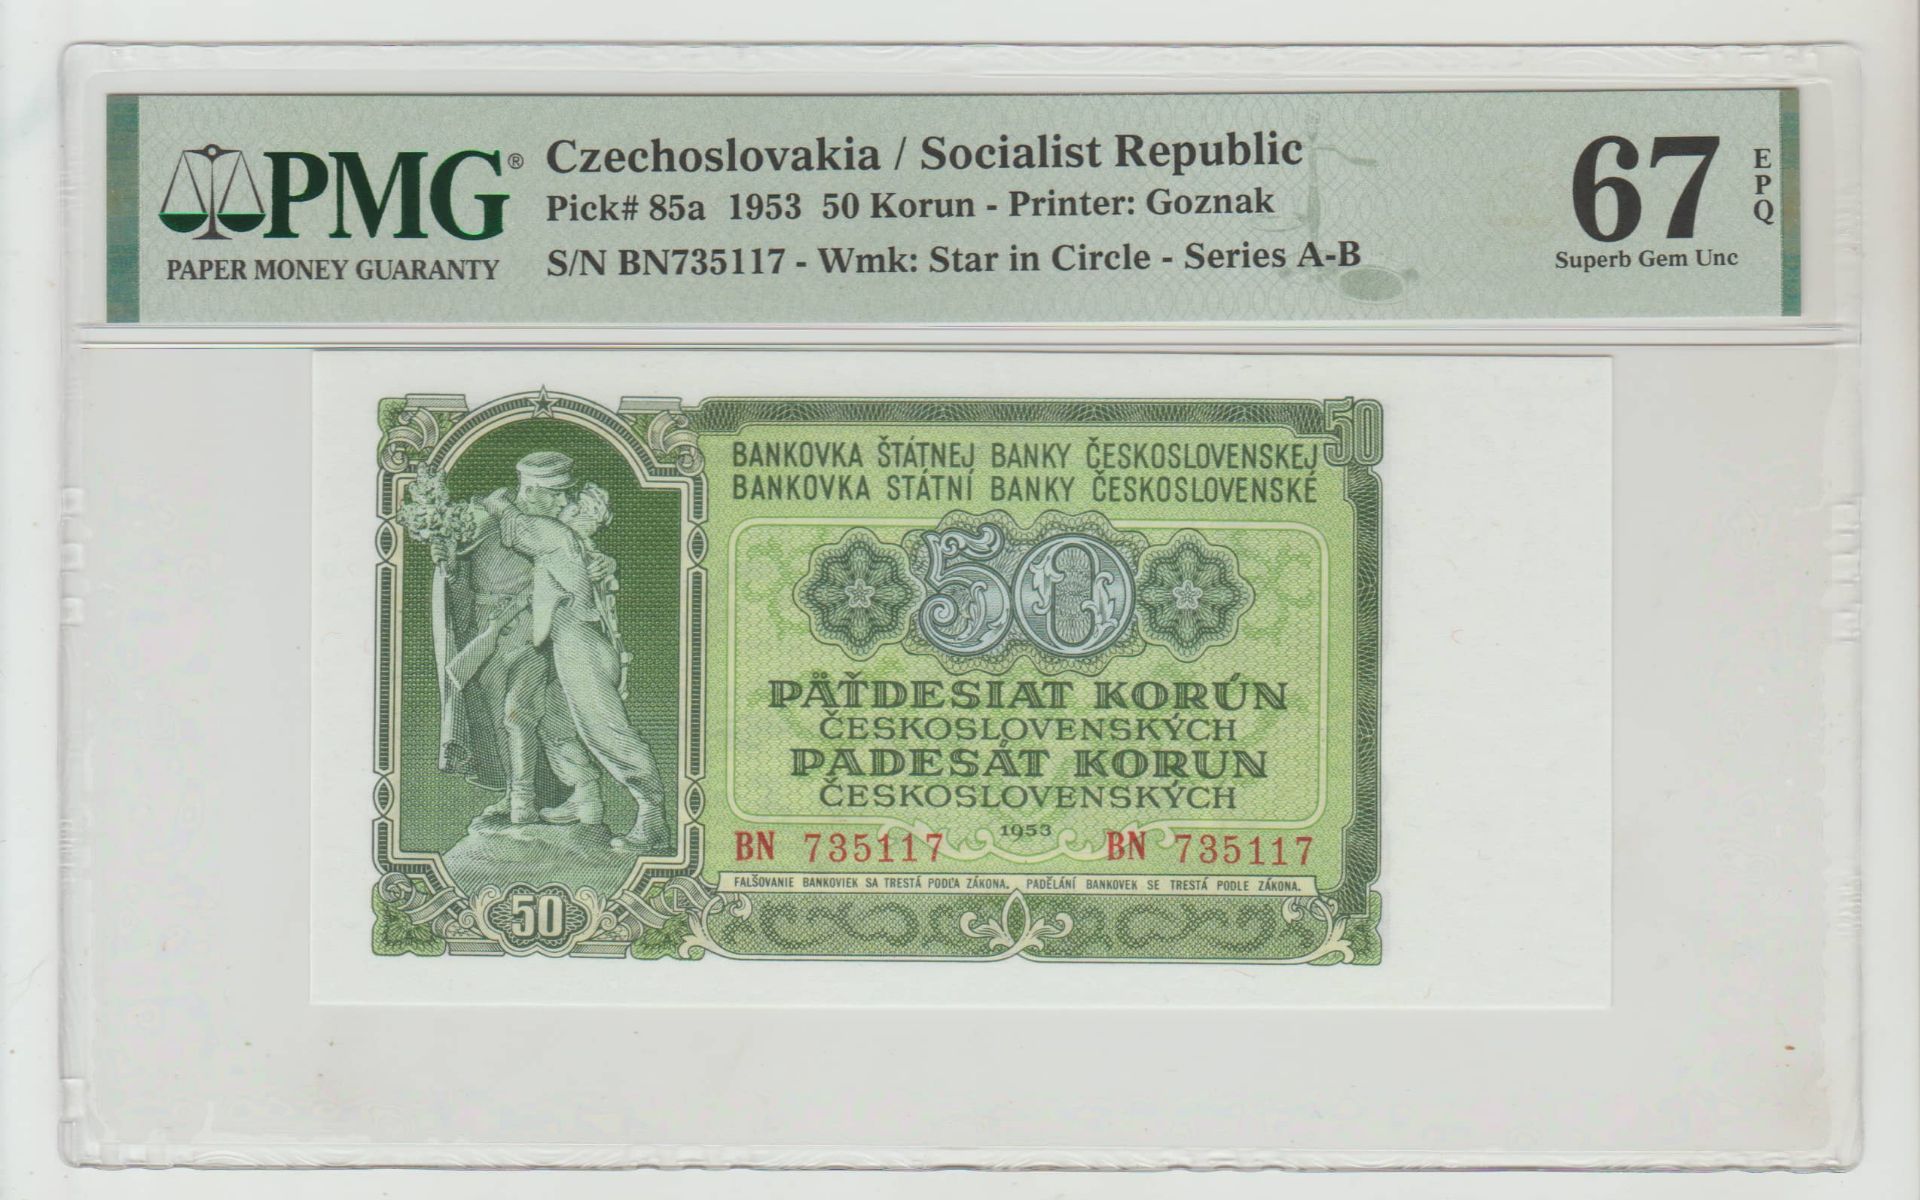 Czechoslovakia/Socialist Republic, 50 Korun, 1953 year, PMG 67